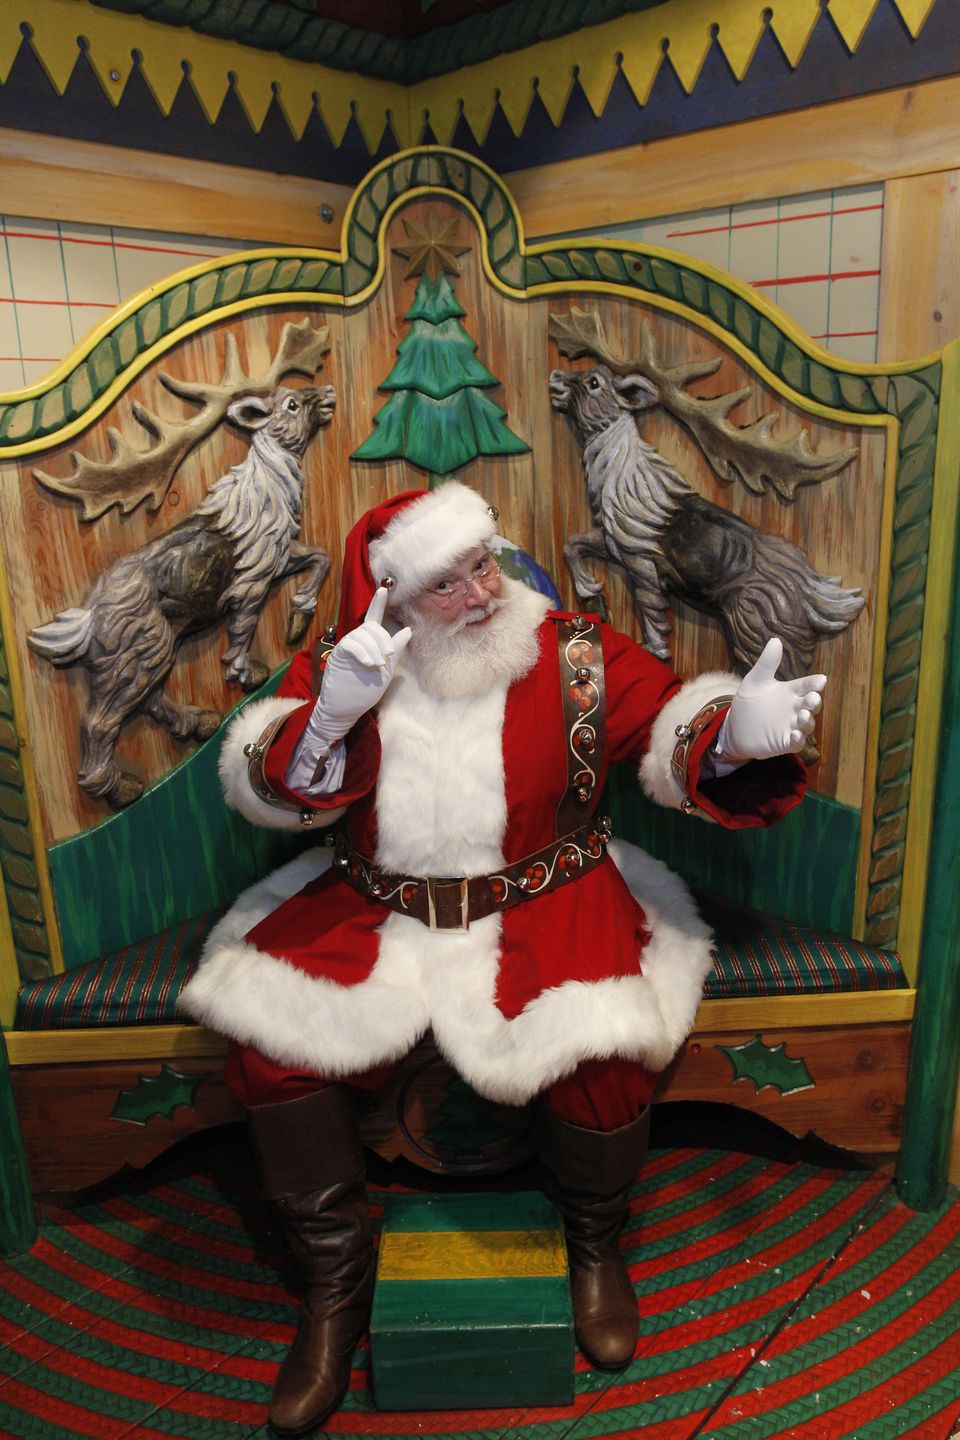 How to Visit Santa at Macy's in New York City